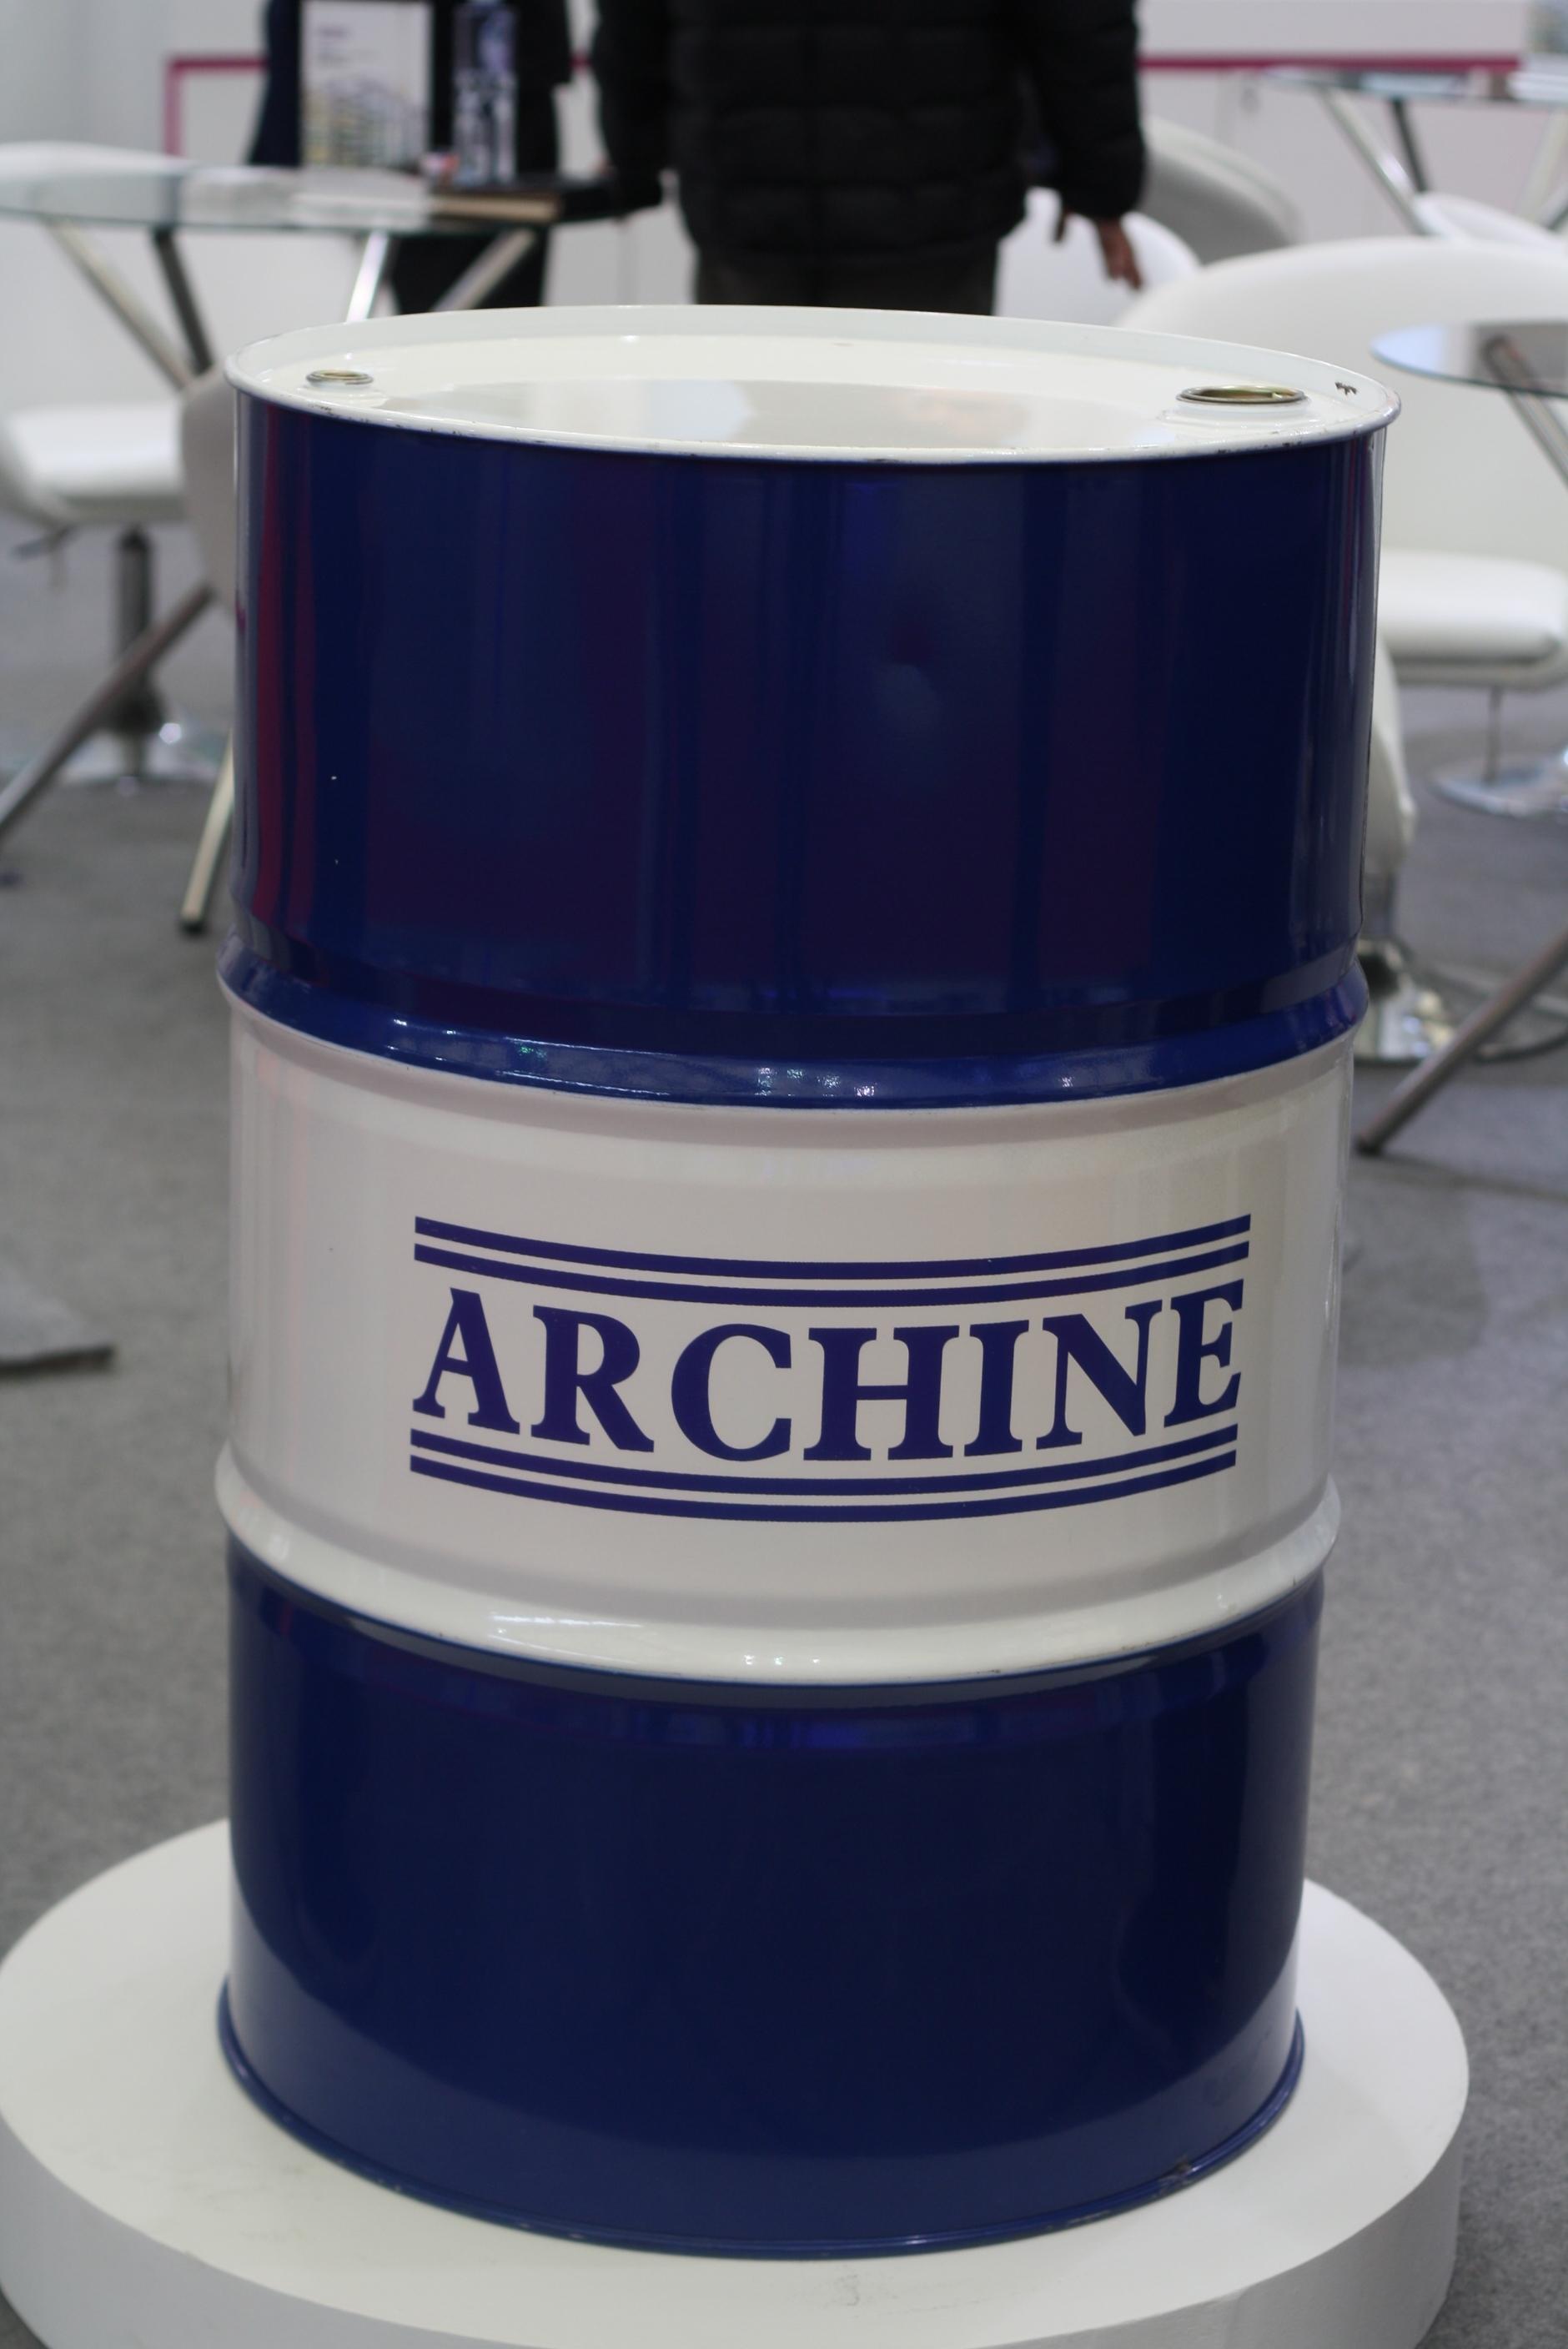 ArChine Corotech M36